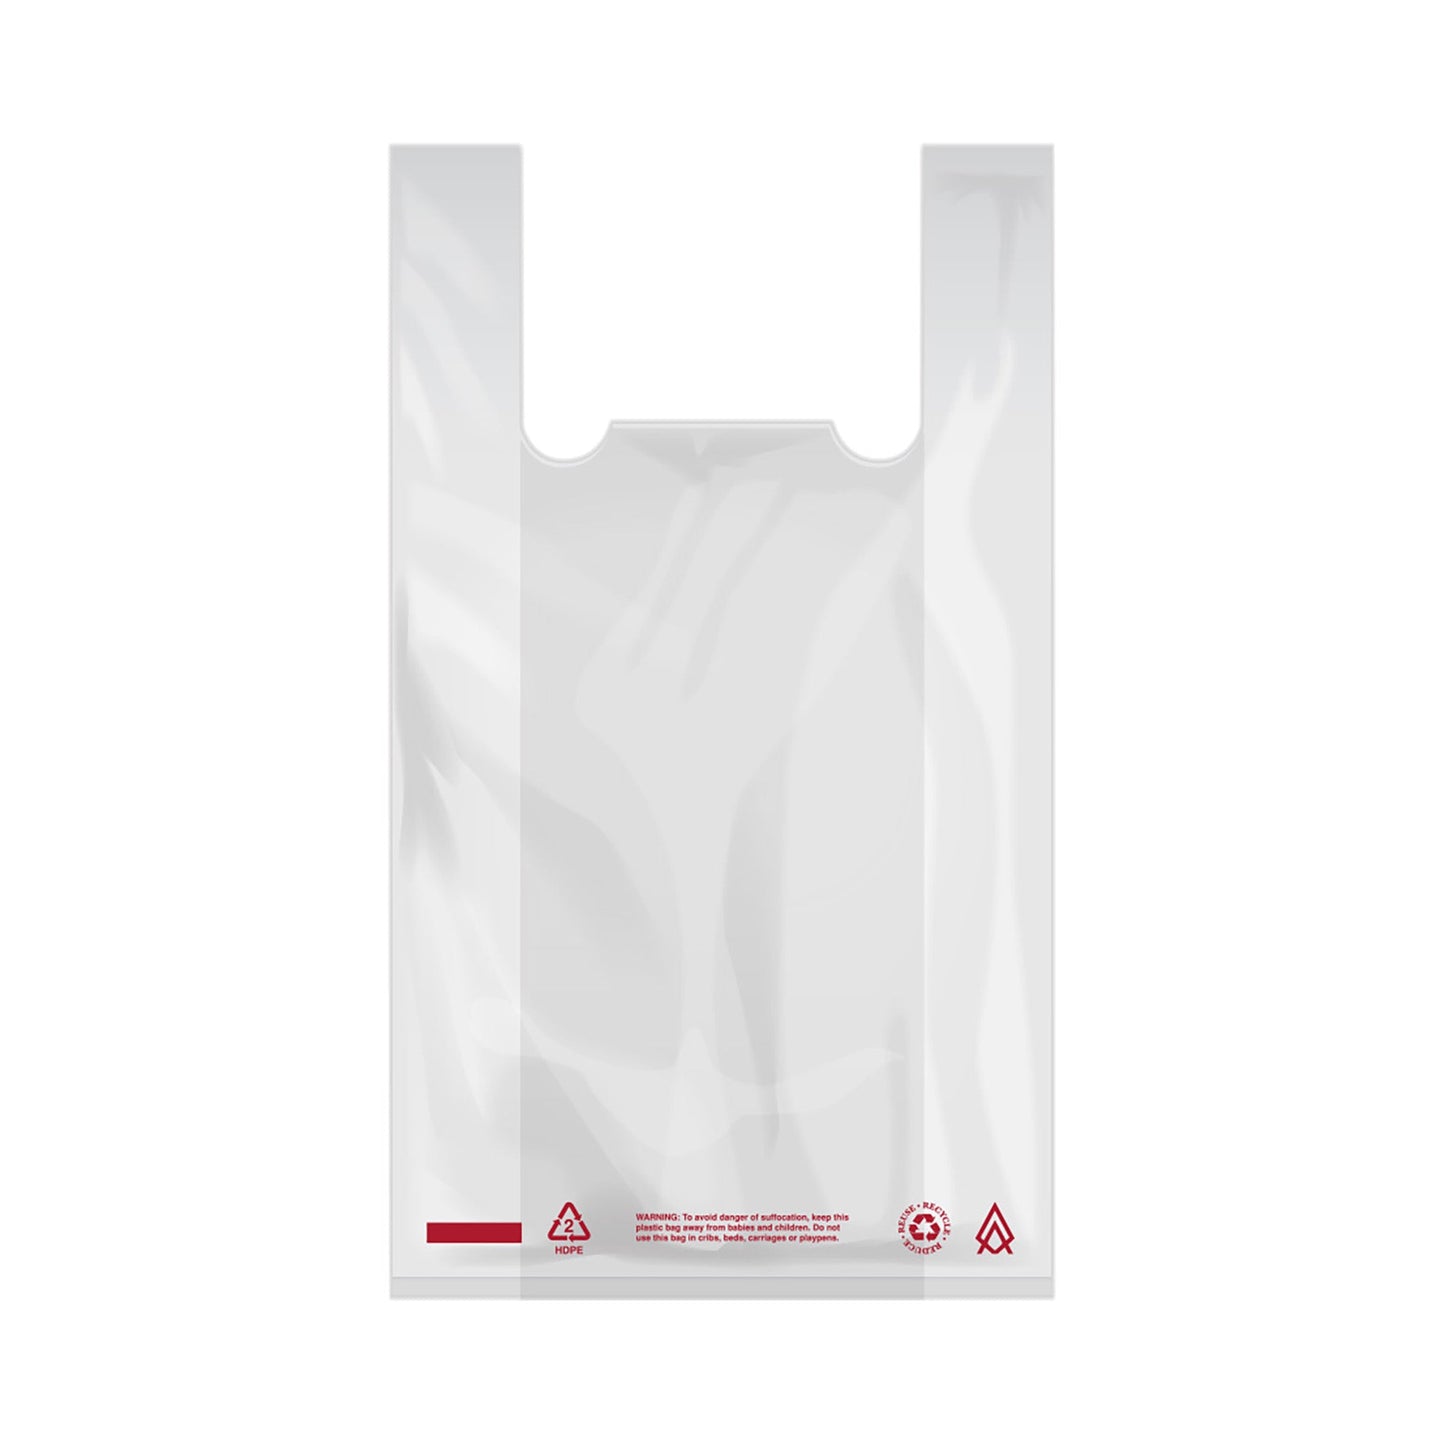 T-Shirt Bag "Warning" Language White Plastic - Roll Bags - 4 Rolls/Case